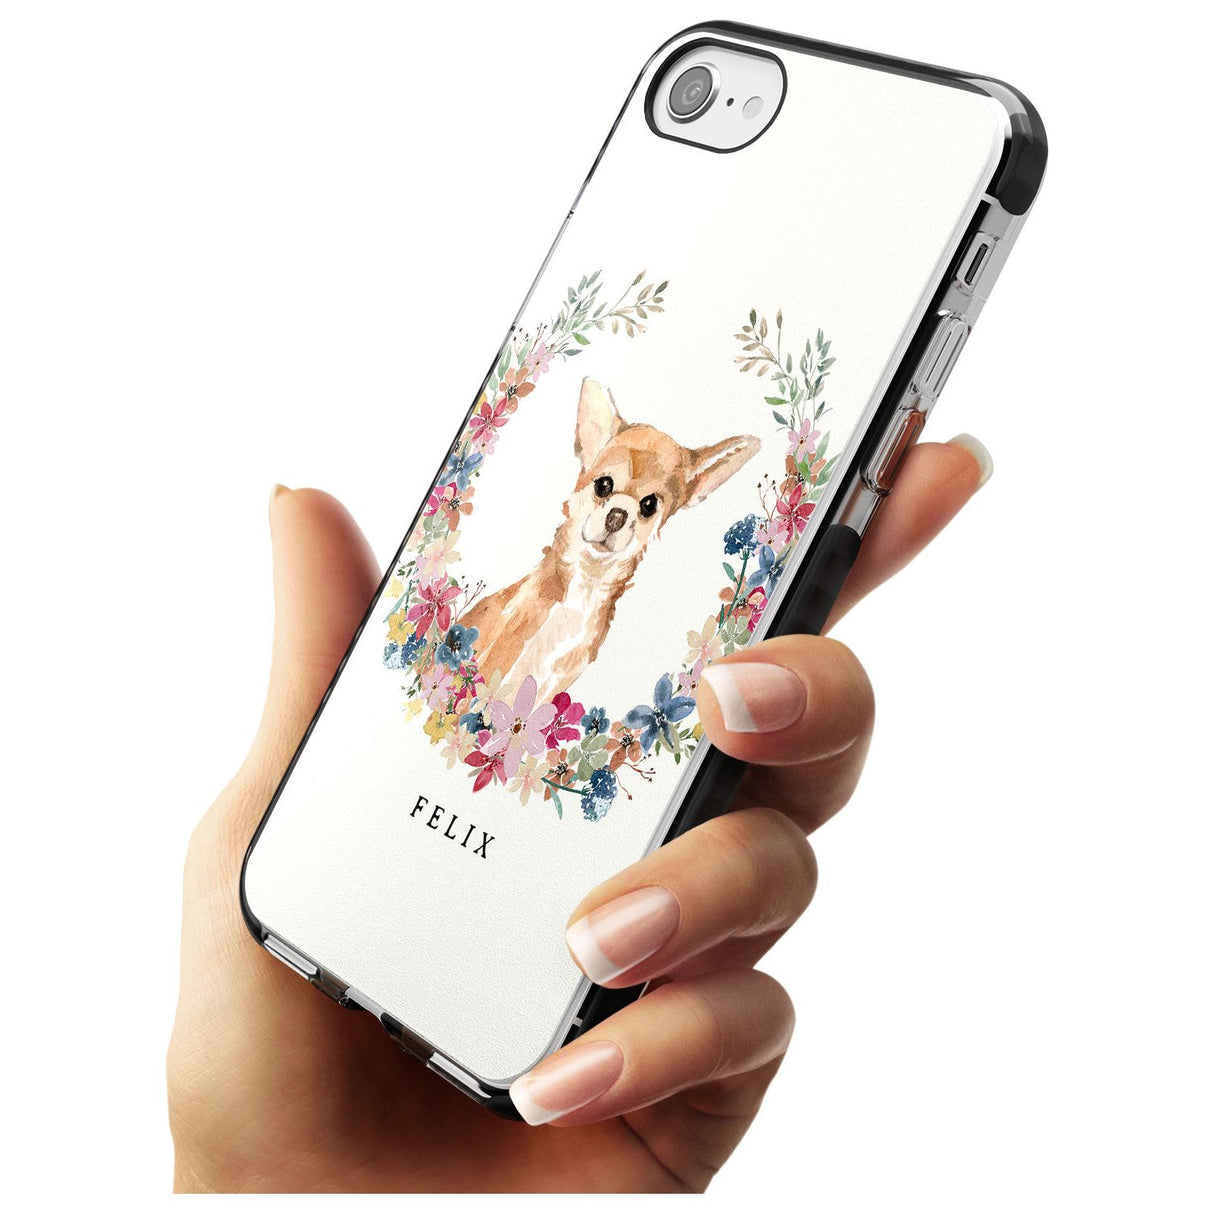 Chihuahua - Watercolour Dog Portrait Black Impact Phone Case for iPhone SE 8 7 Plus